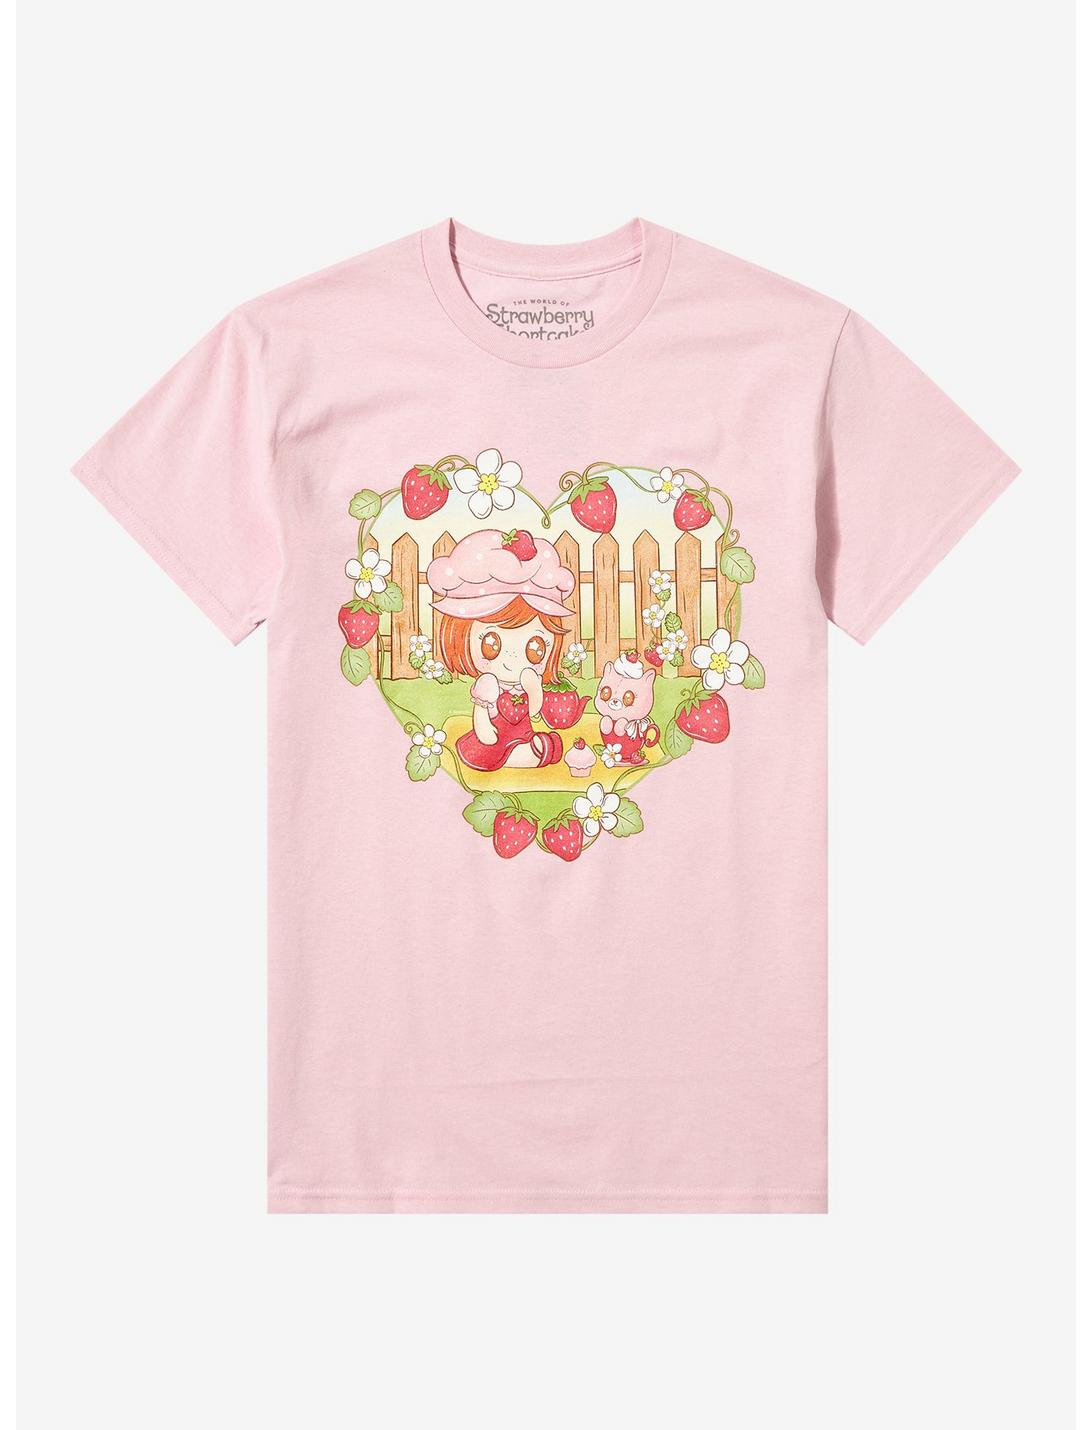 Strawberry Shortcake X Spooksieboo Heart Boyfriend Fit Girls T-Shirt, MULTI, hi-res